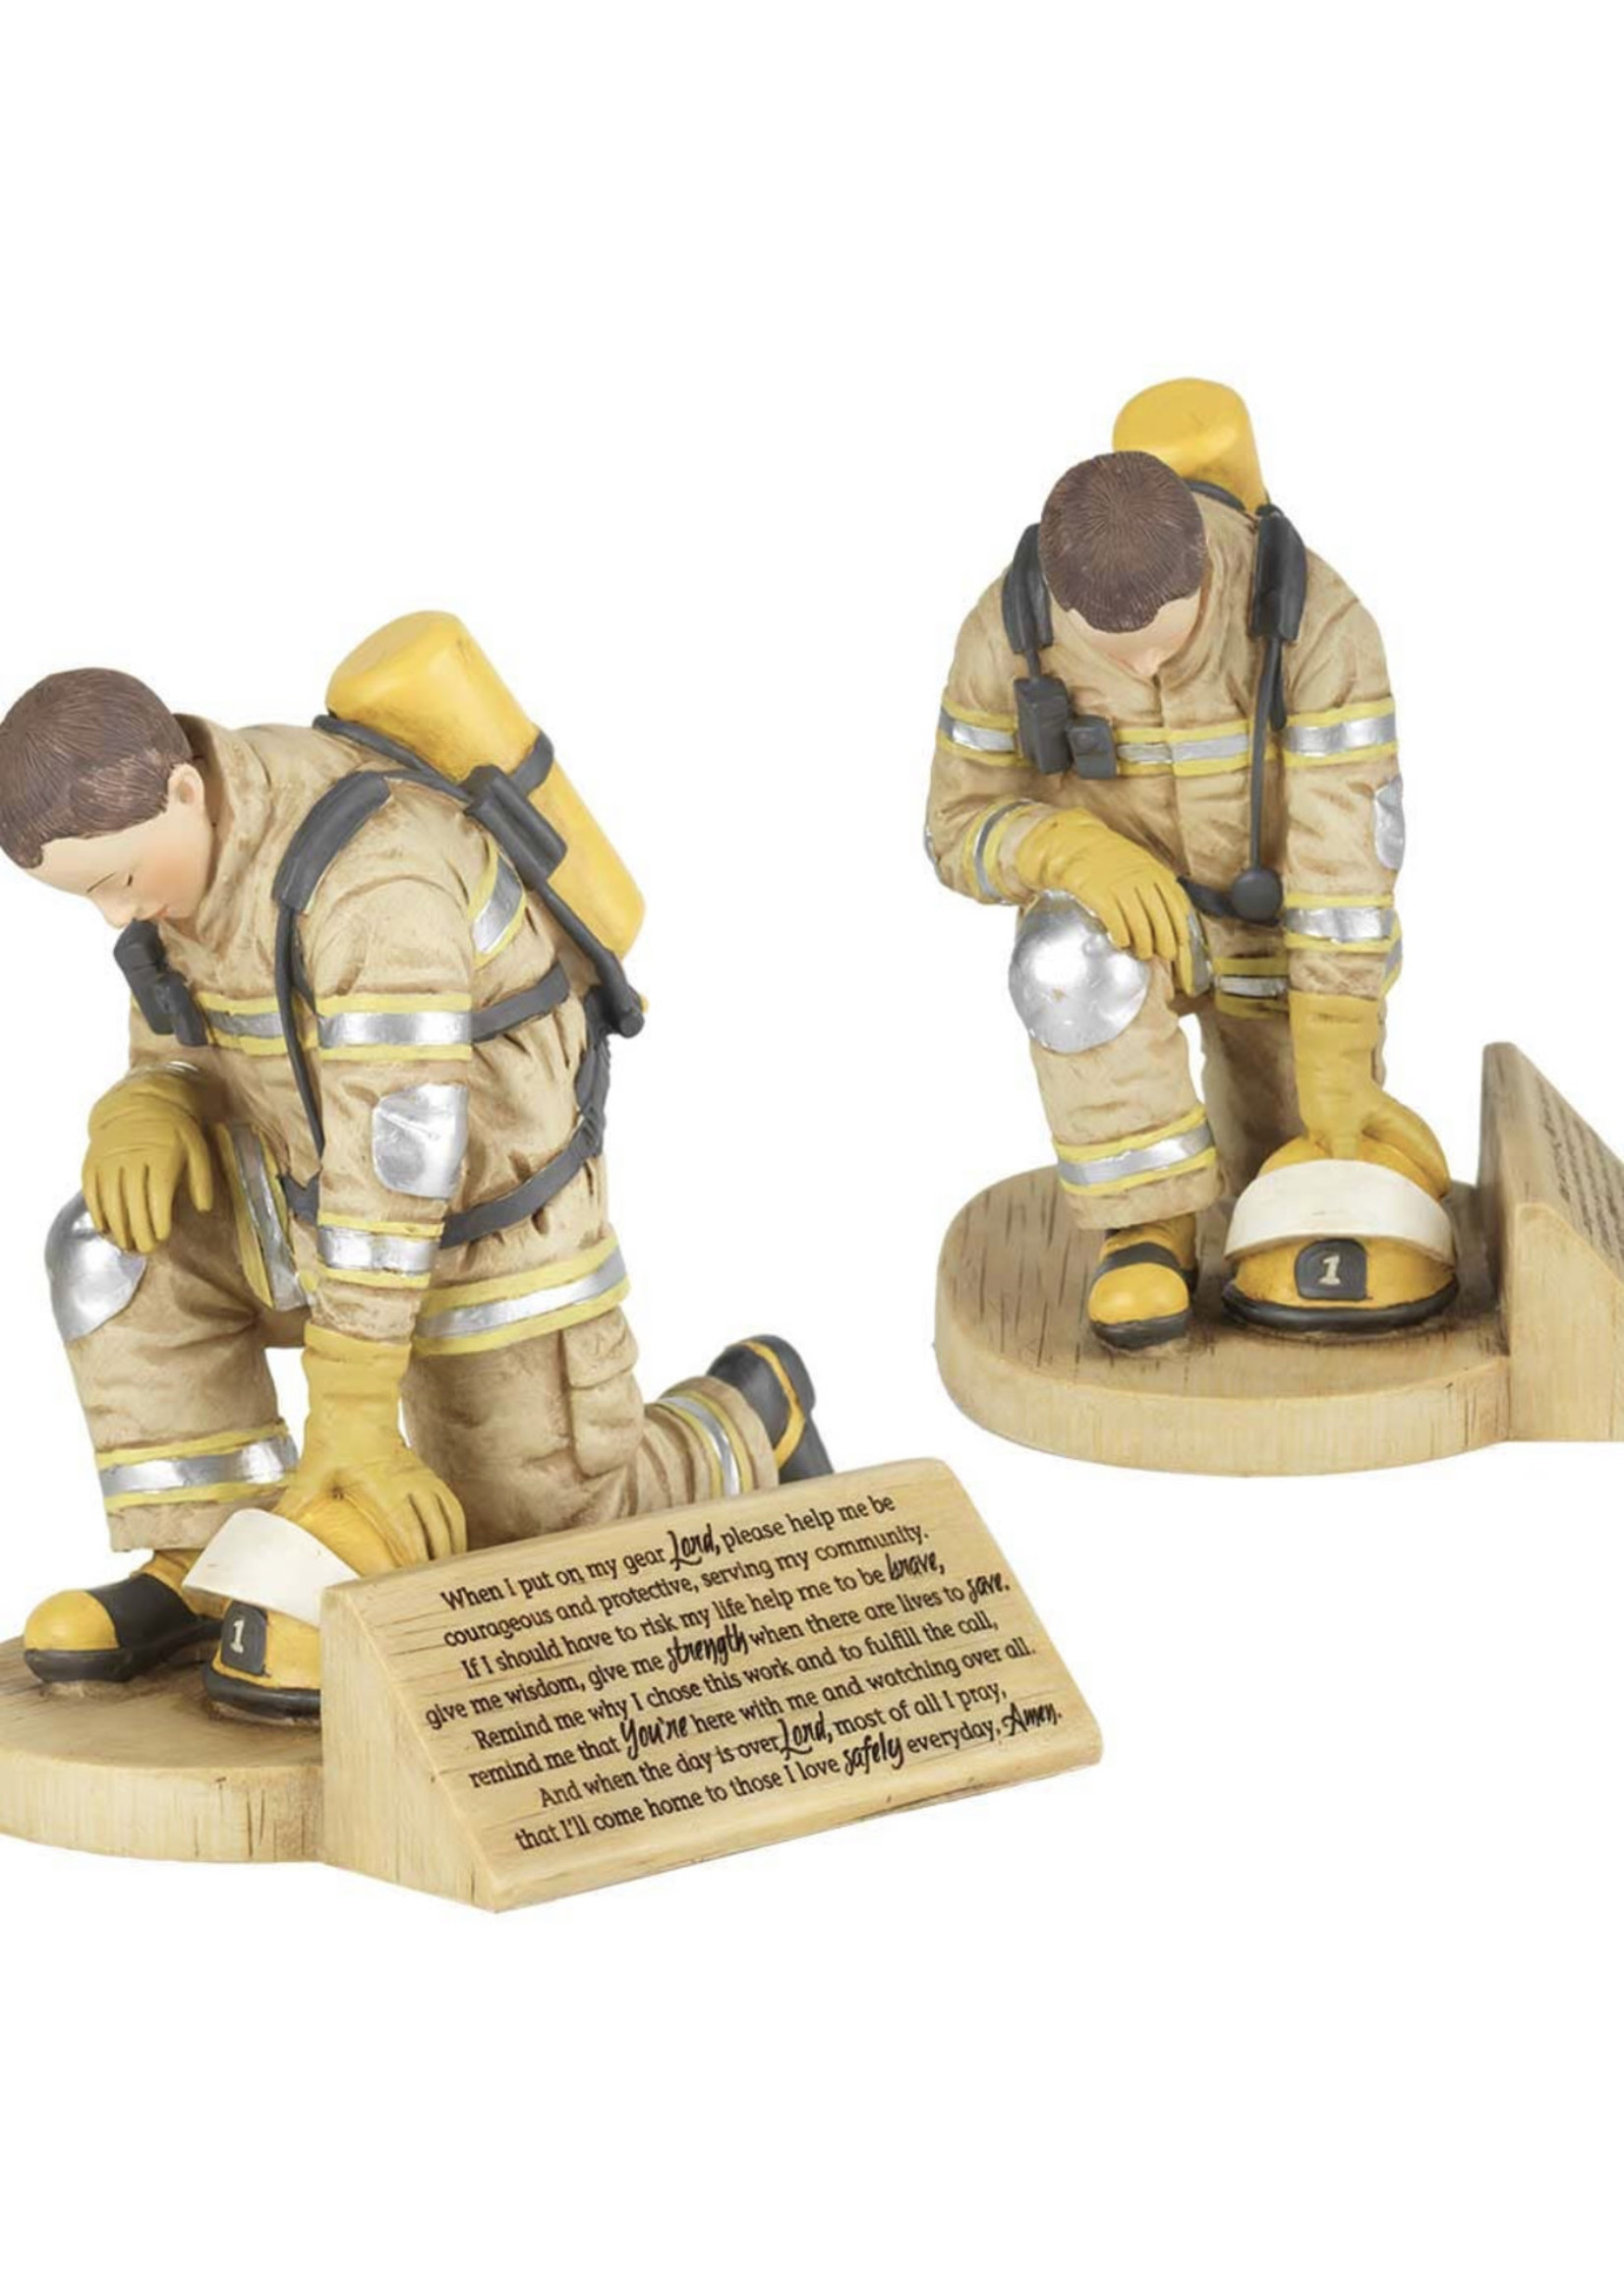 Dicksons Firefighter's Prayer Figurine